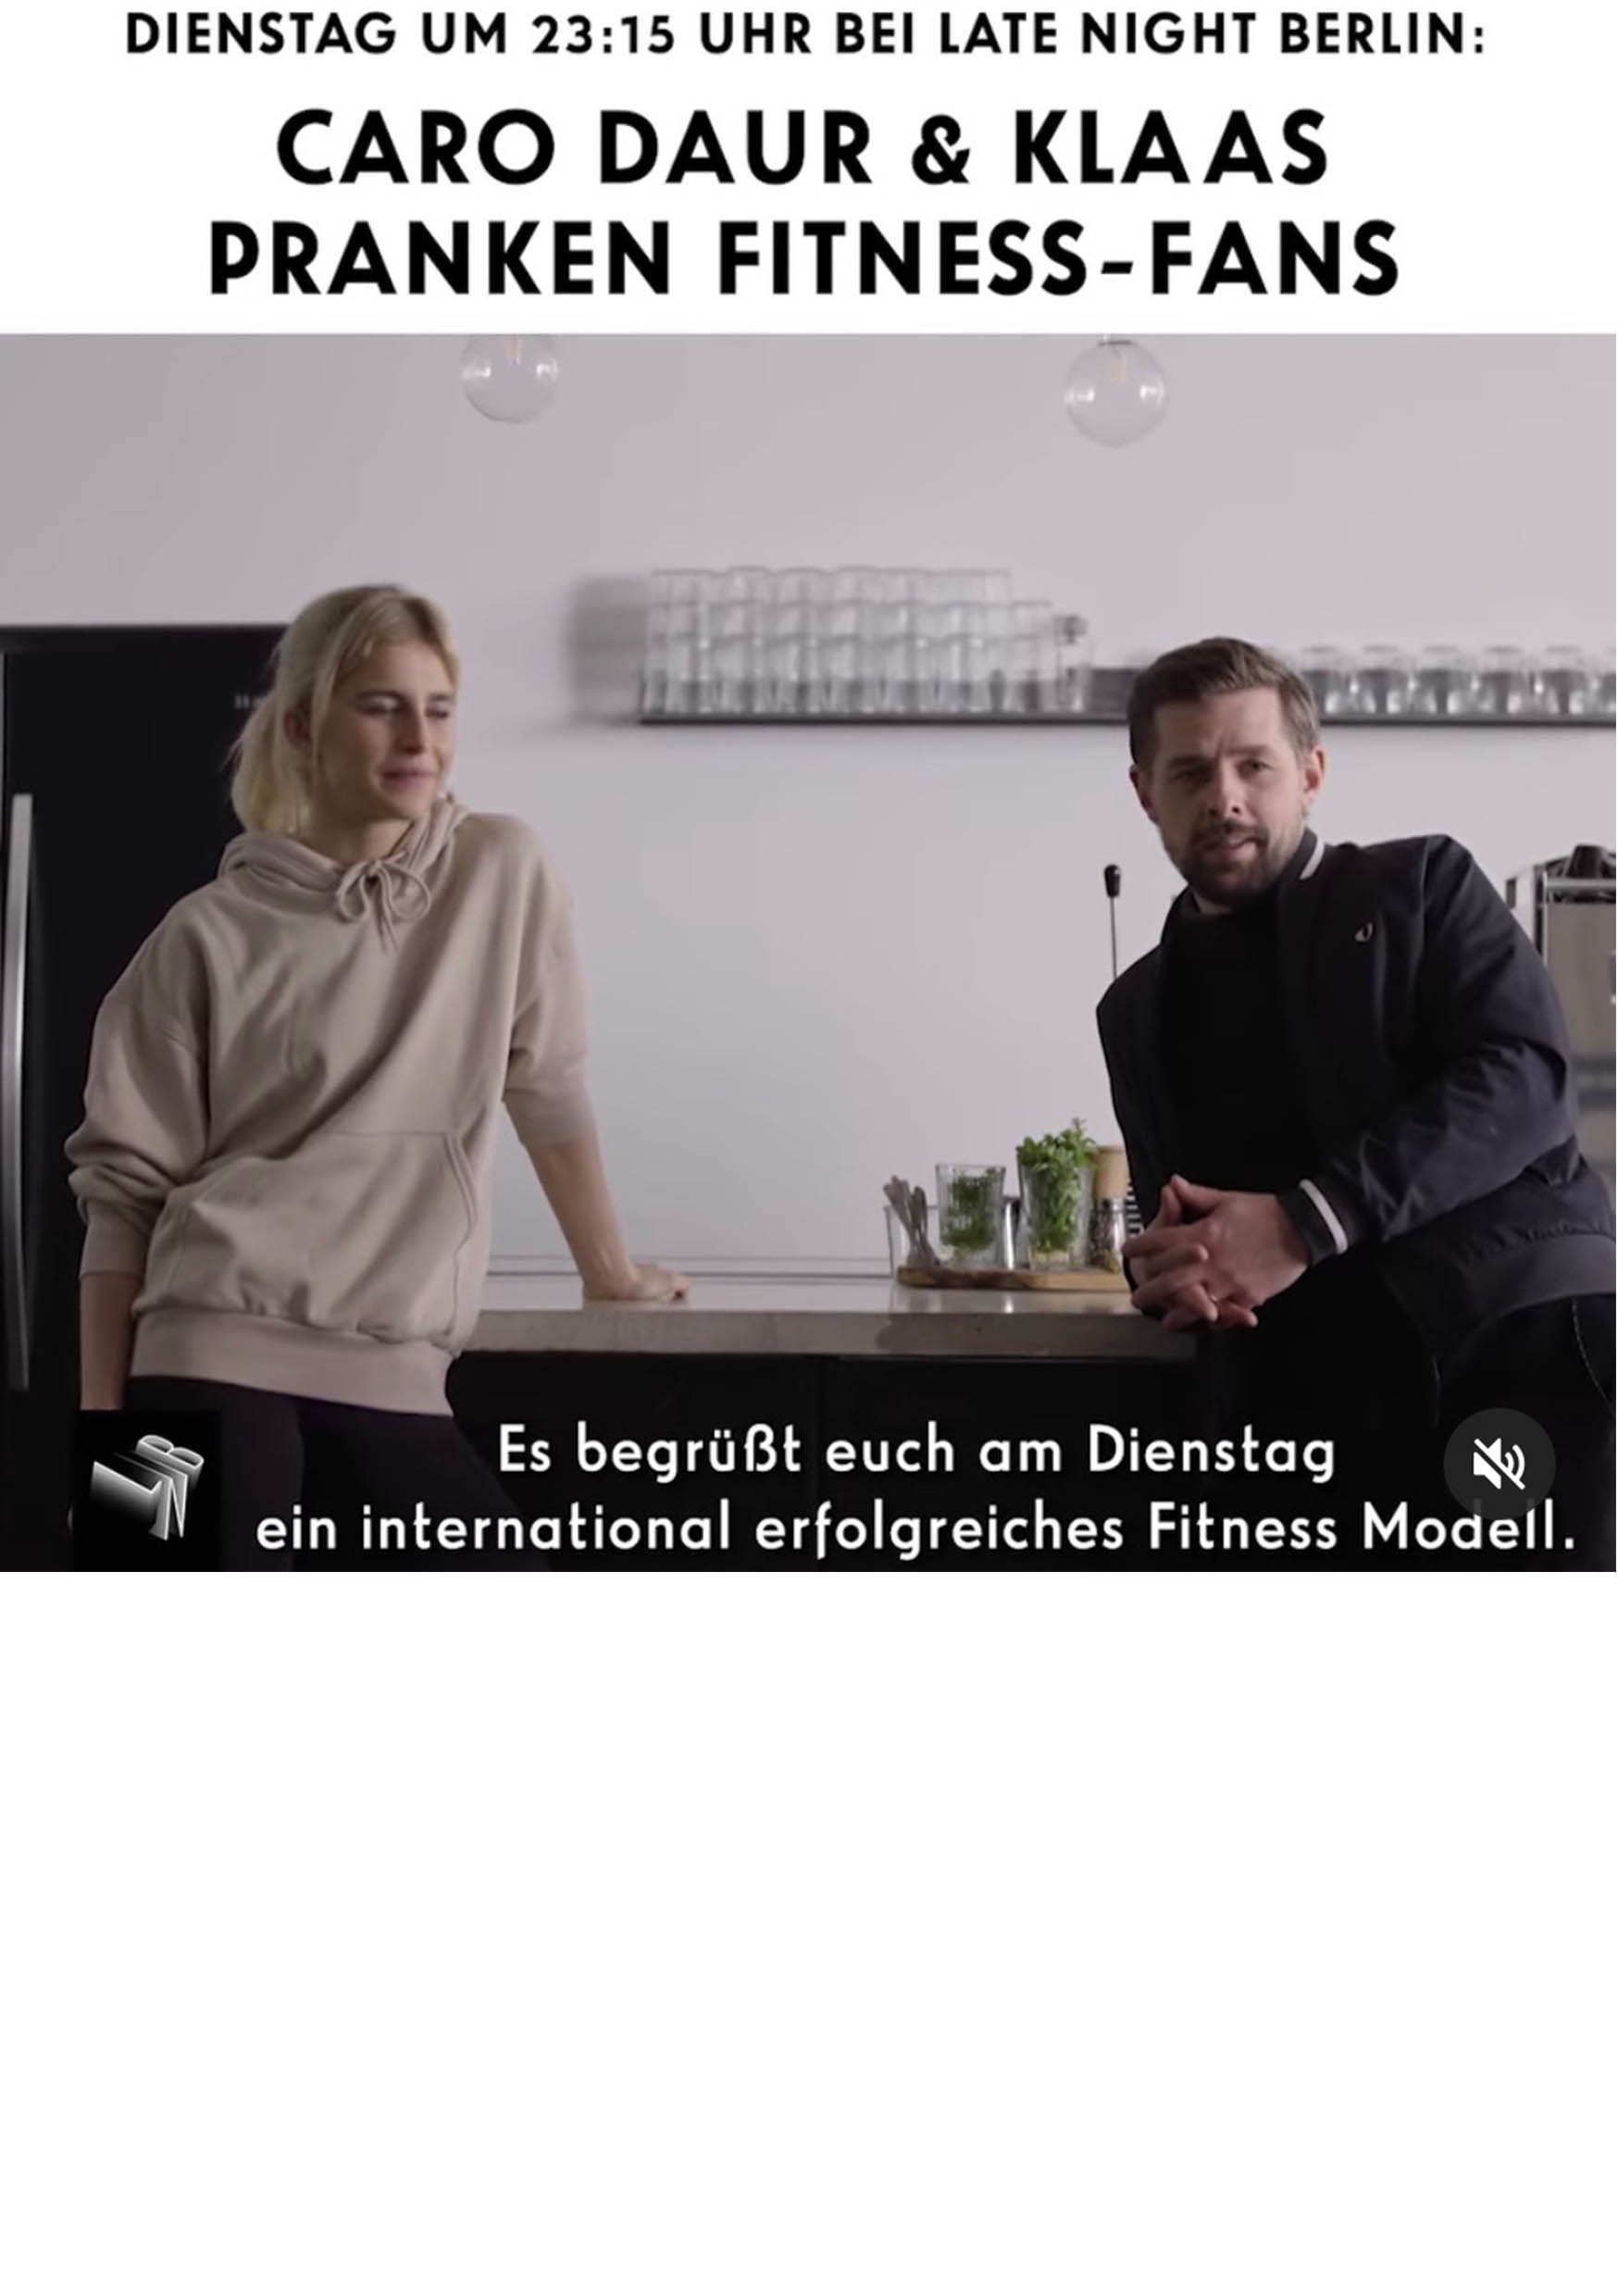 Late Night Berlin host Klaas and instagrammer Caro Daur prank fitness fans at raw studios.